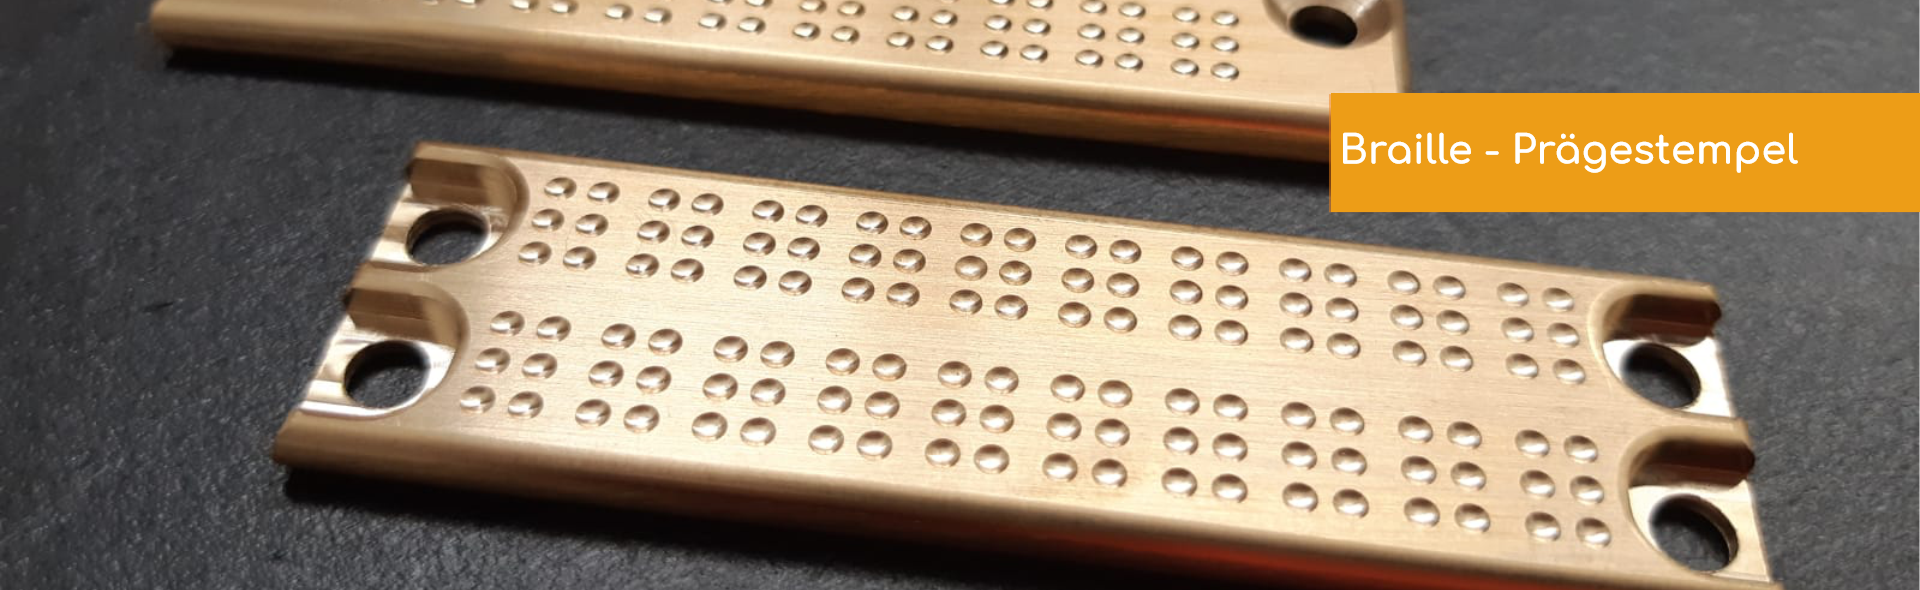 Braille - Prägestempel